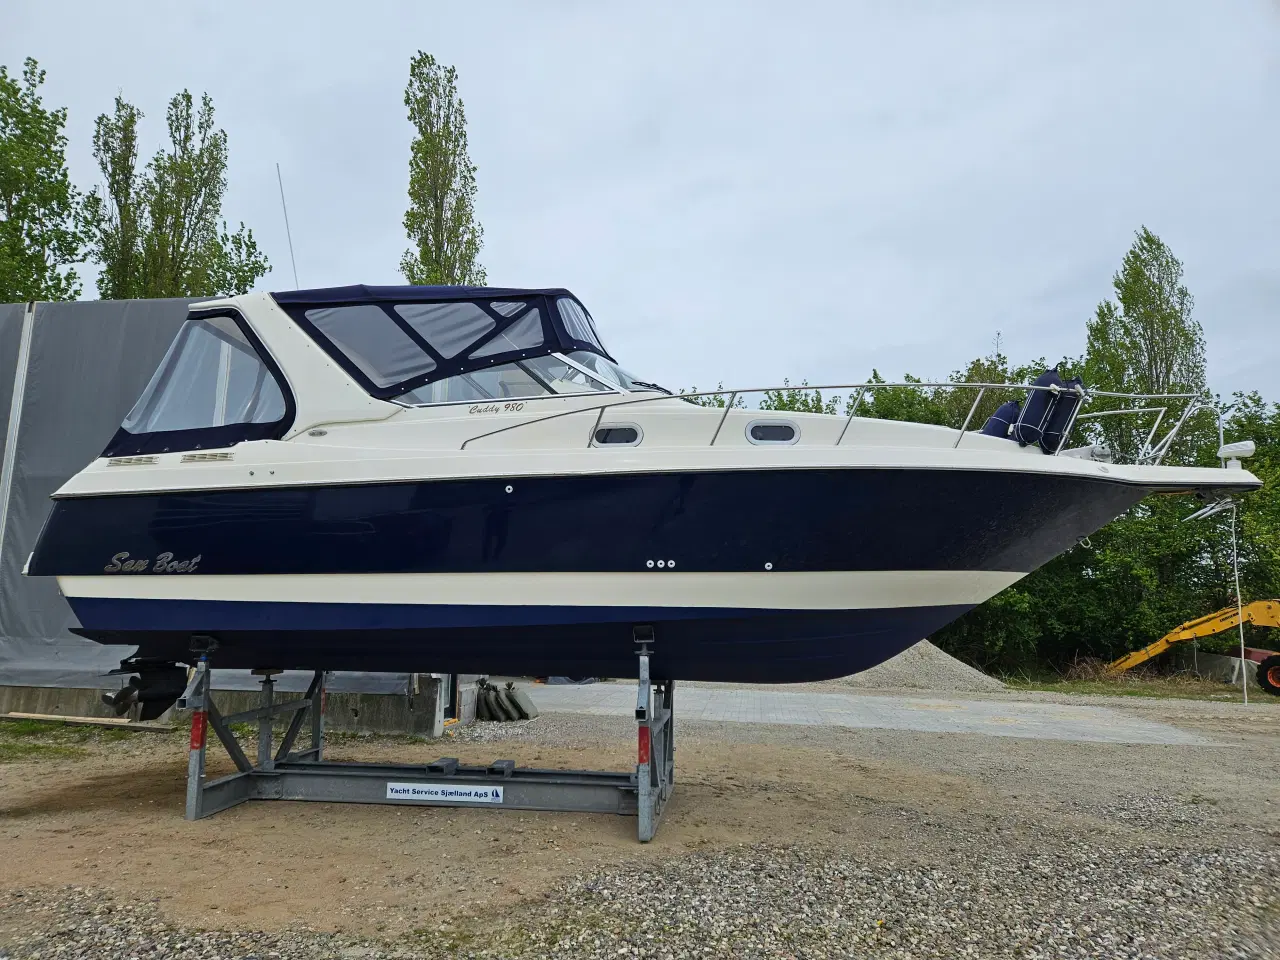 Billede 1 - Båd 32 fods San Boat Cuddy 980 model 2003